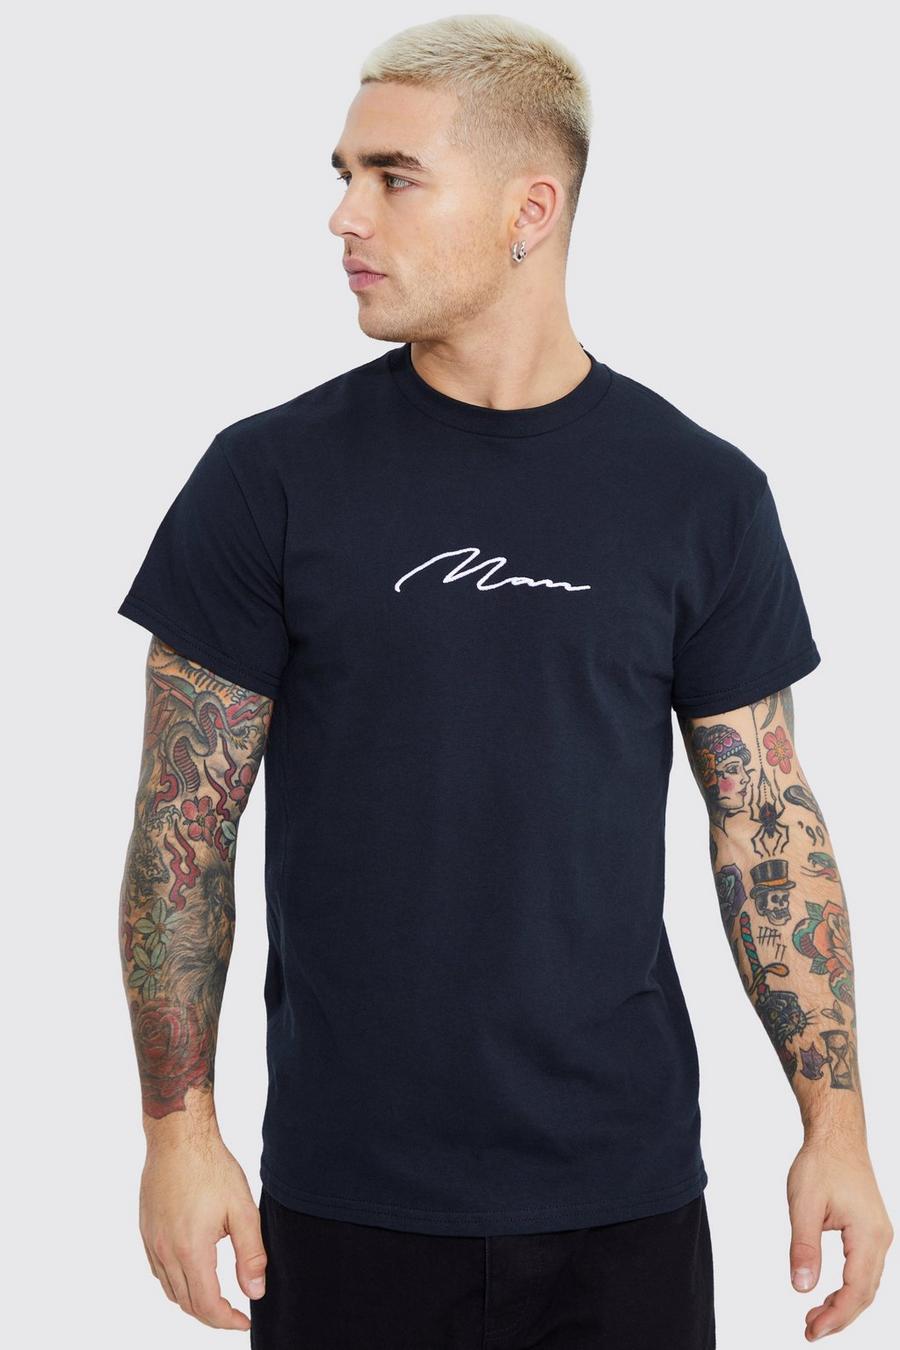 T-shirt con firma Man e ricami, Black nero image number 1